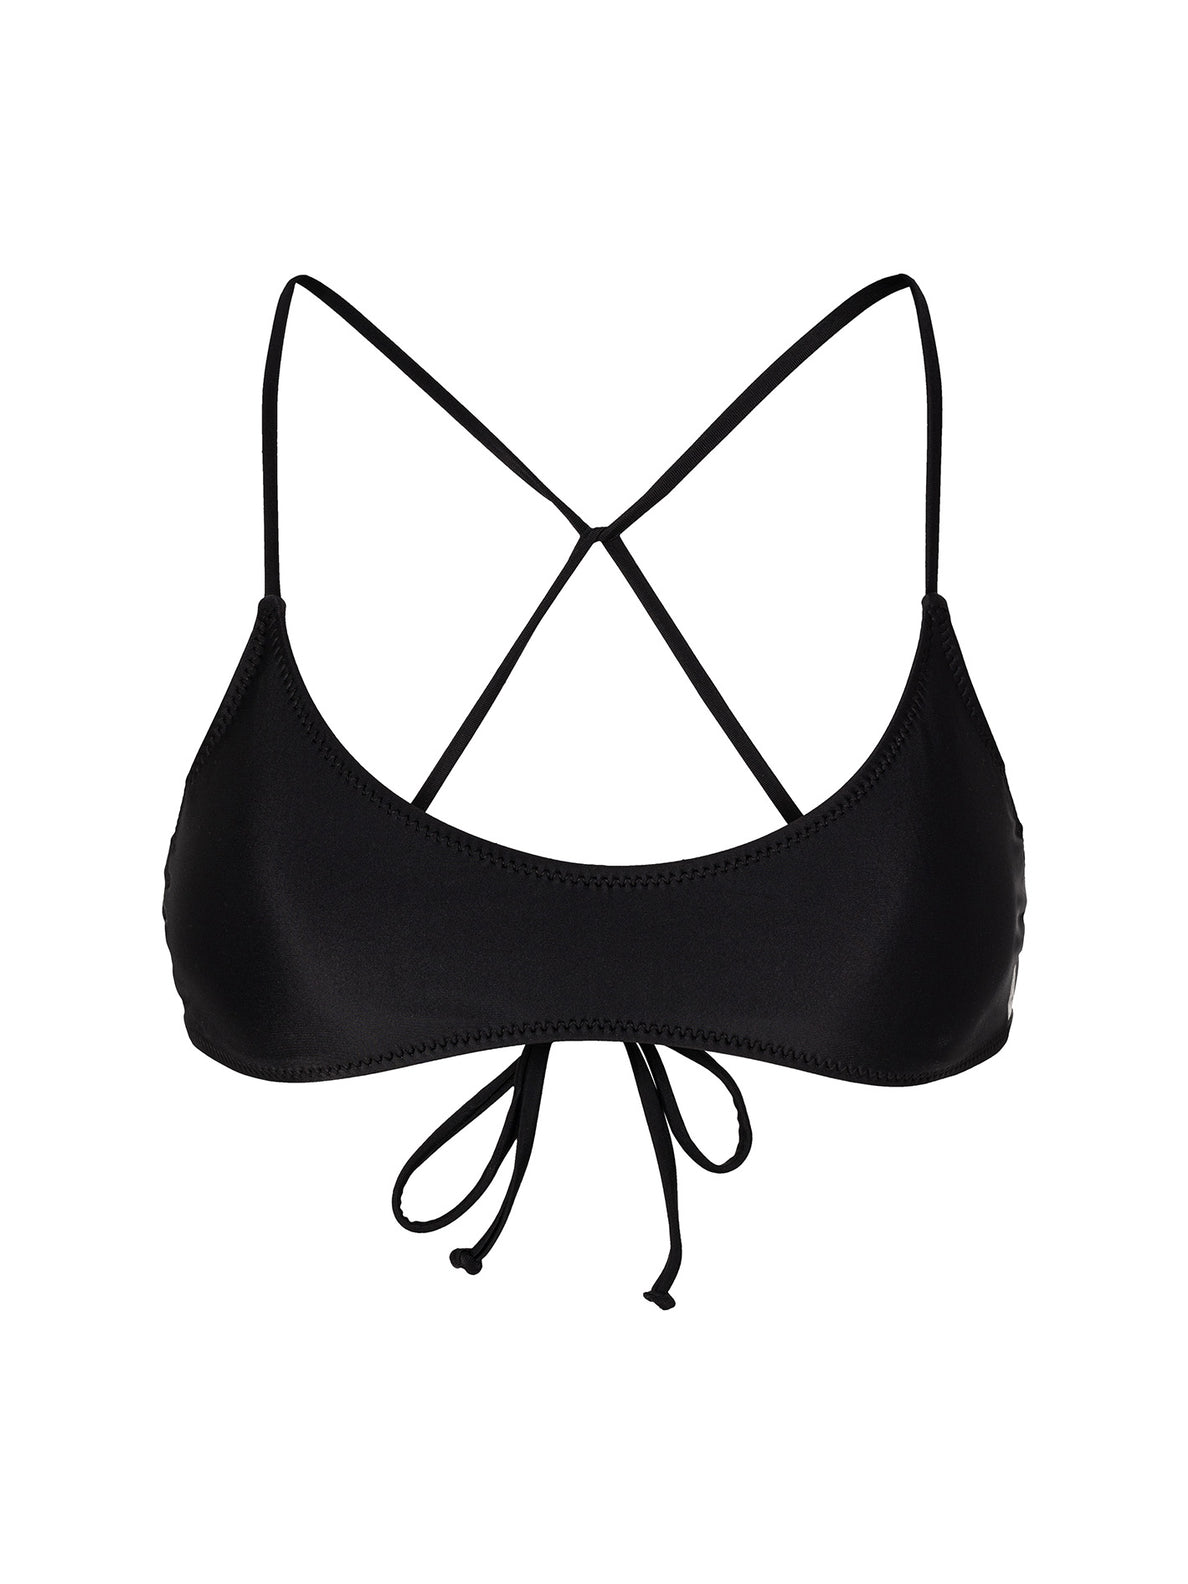 Simply Solid Scoop Bikini Top - Black (O1012108_BLK) [20]